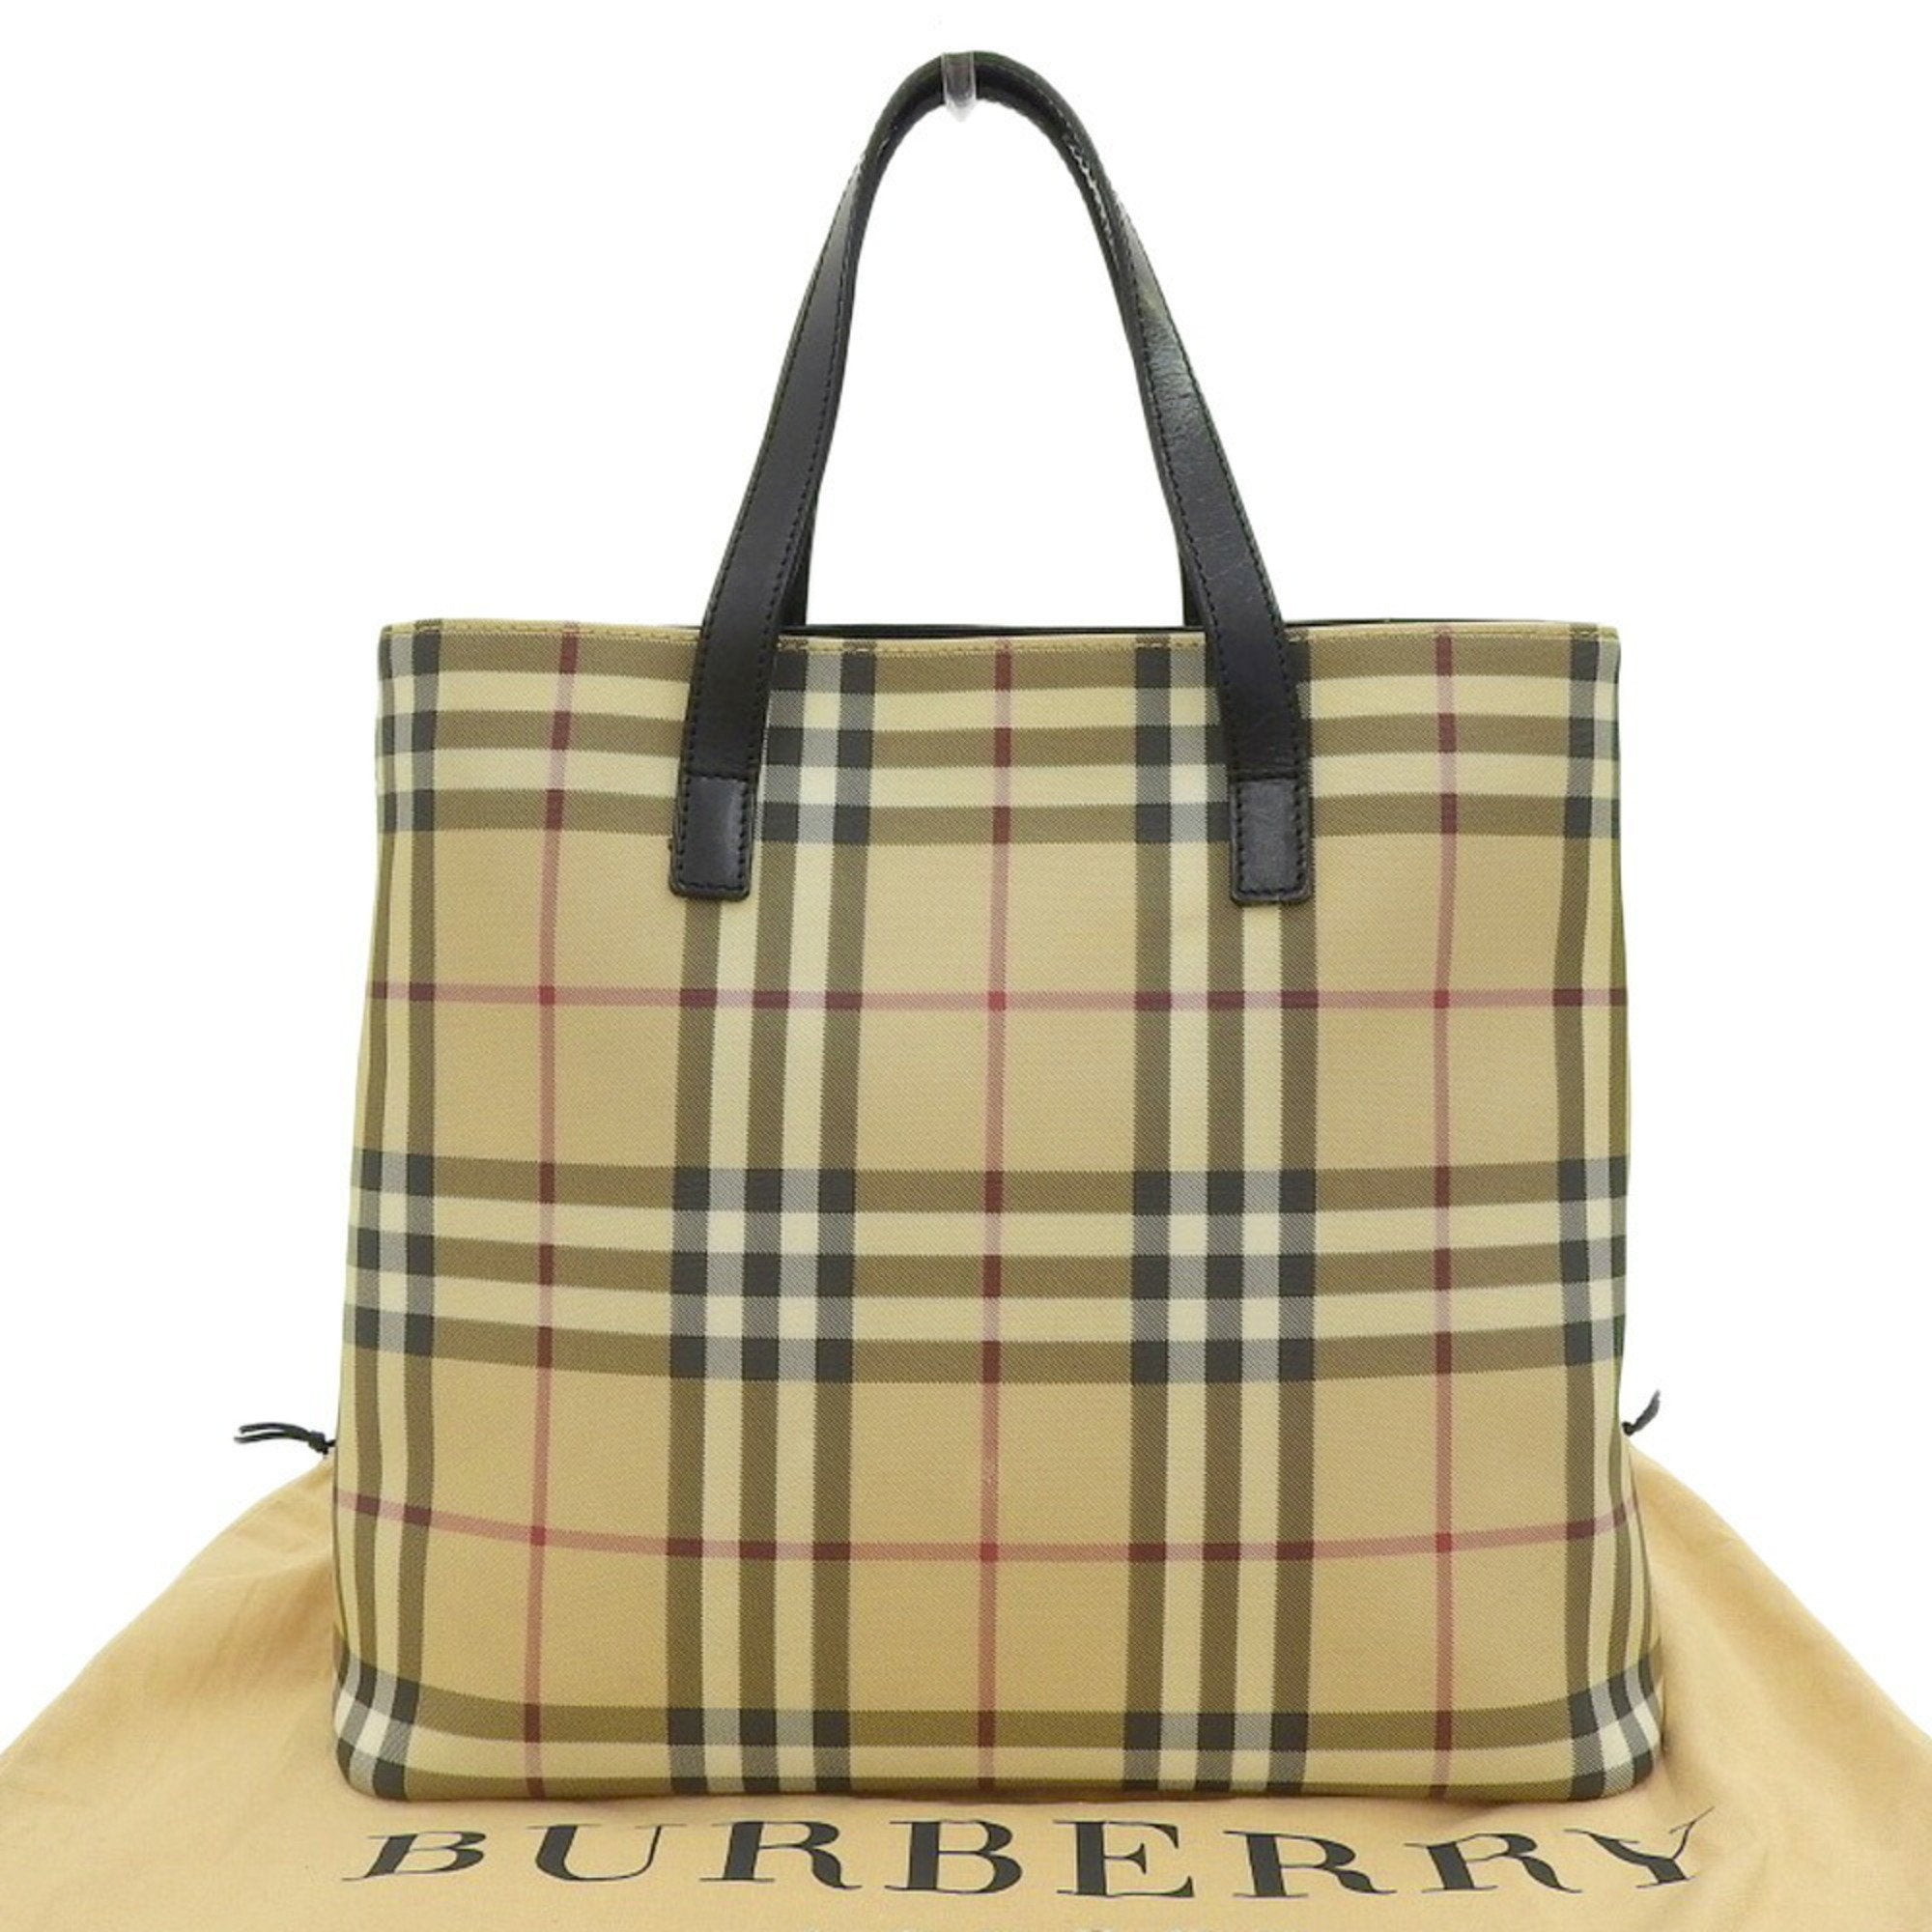 burberry london handbag nova check pattern classic